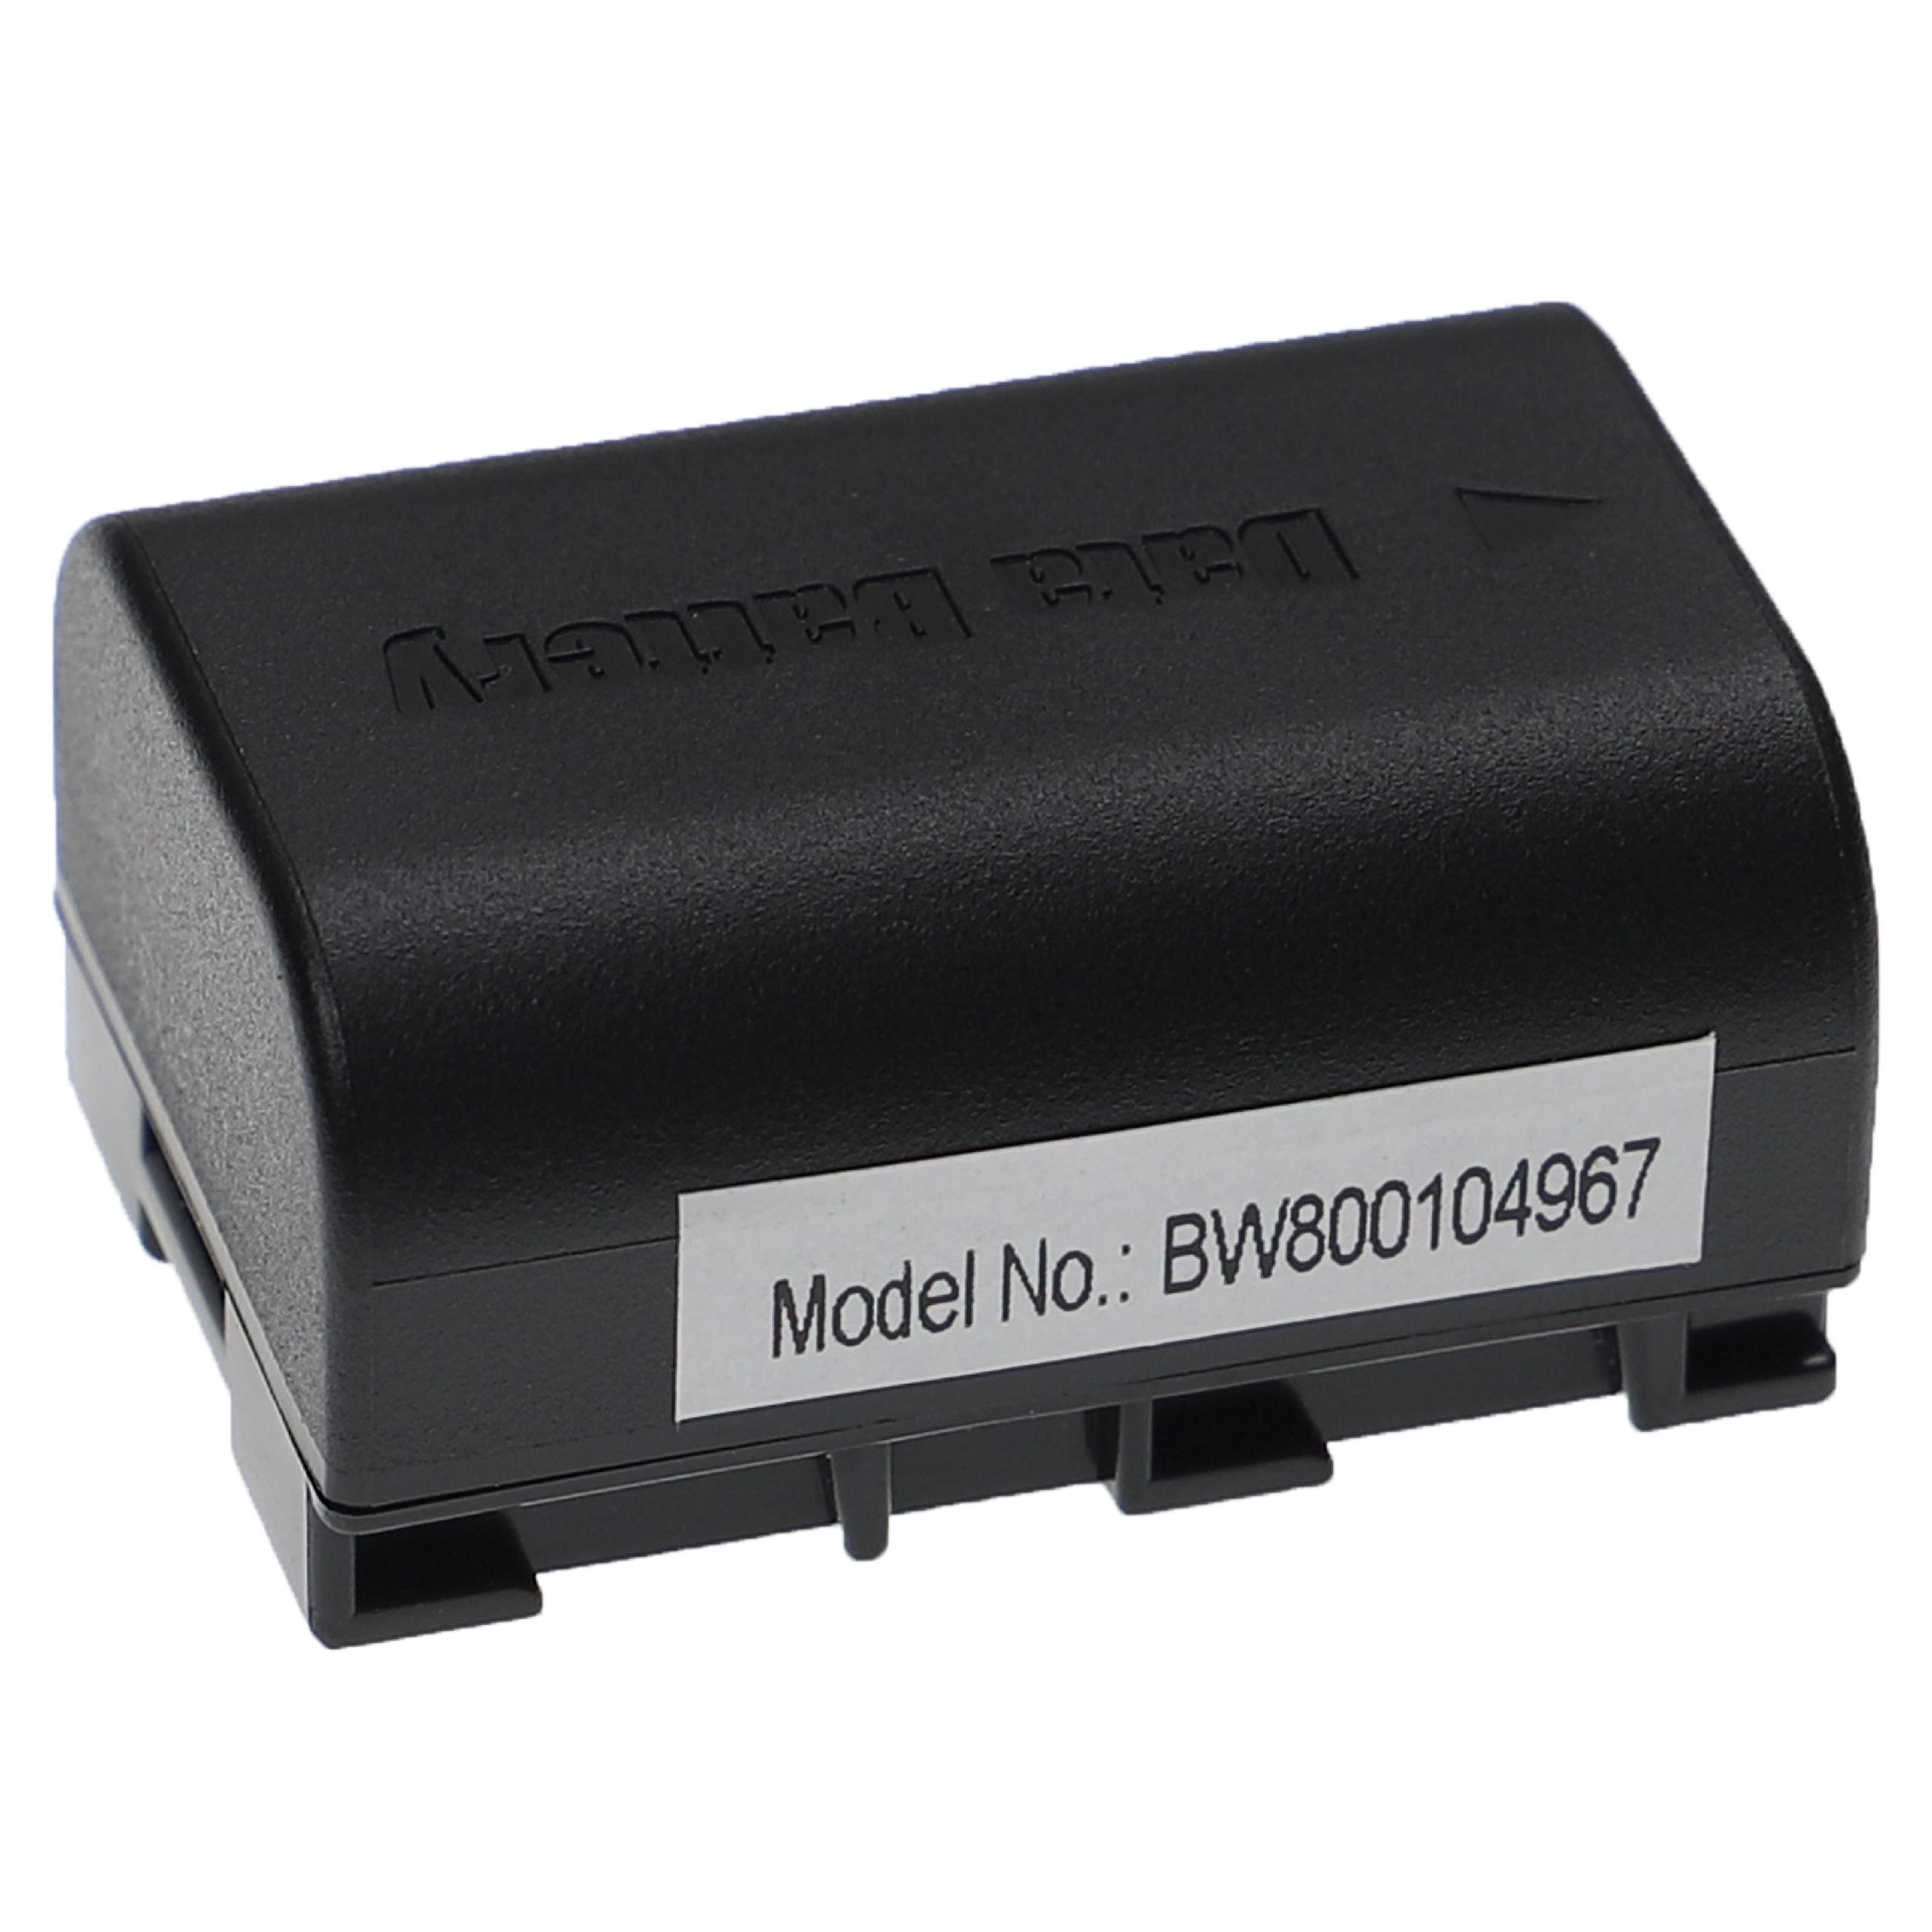 Batteria per videocamera sostituisce JVC BN-VG114 JVC - 1200mAh 3,6V Li-Ion con infochip